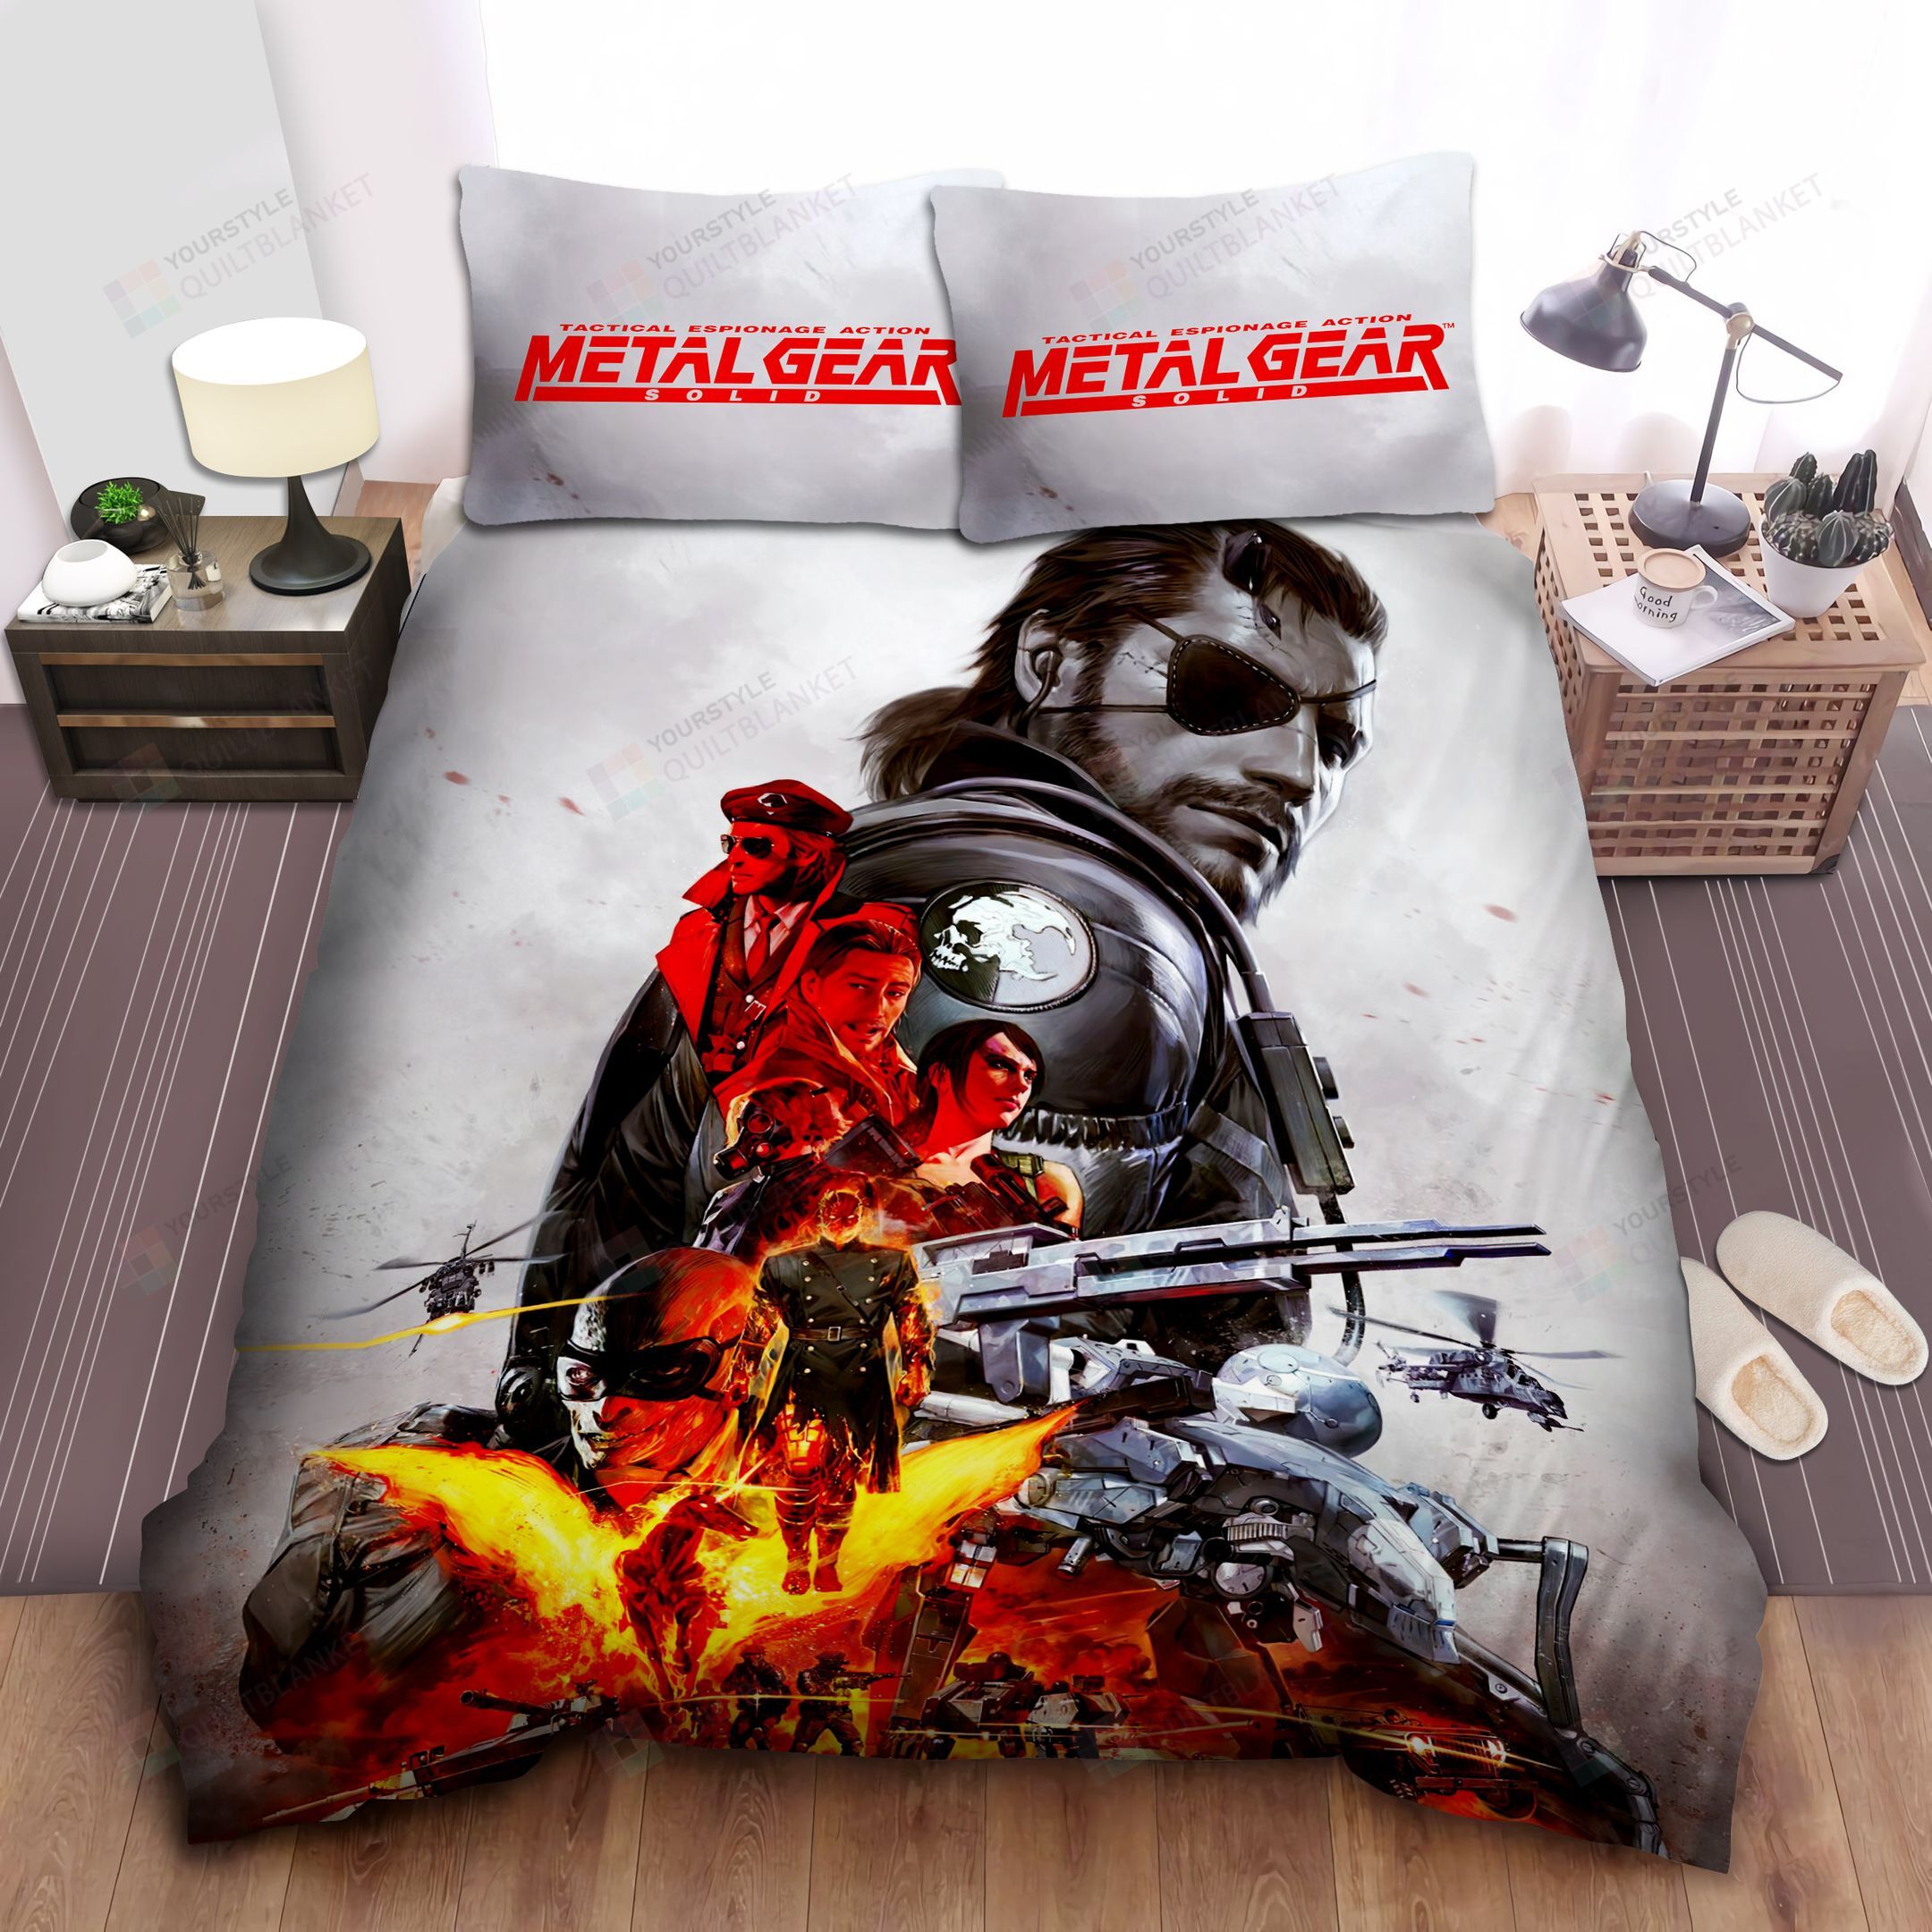 Metal Gear Cast Bed Sheets Spread Comforter Duvet Cover Bedding Sets